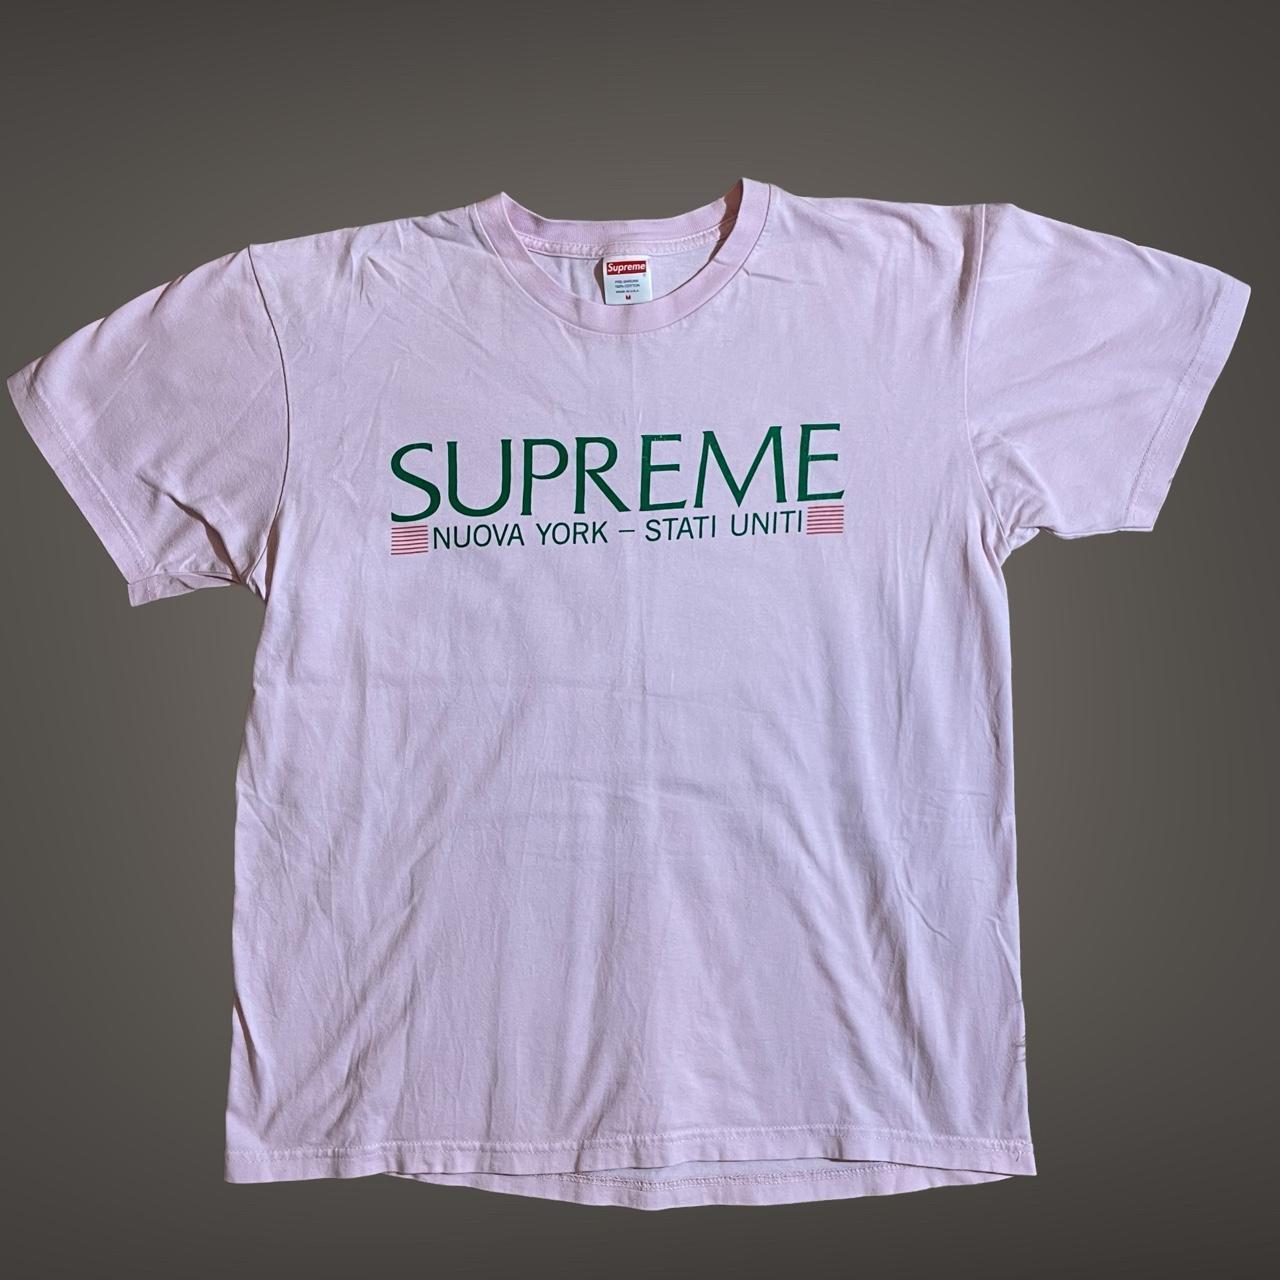 Supreme Nuova York t shirt in pink size medium - Depop